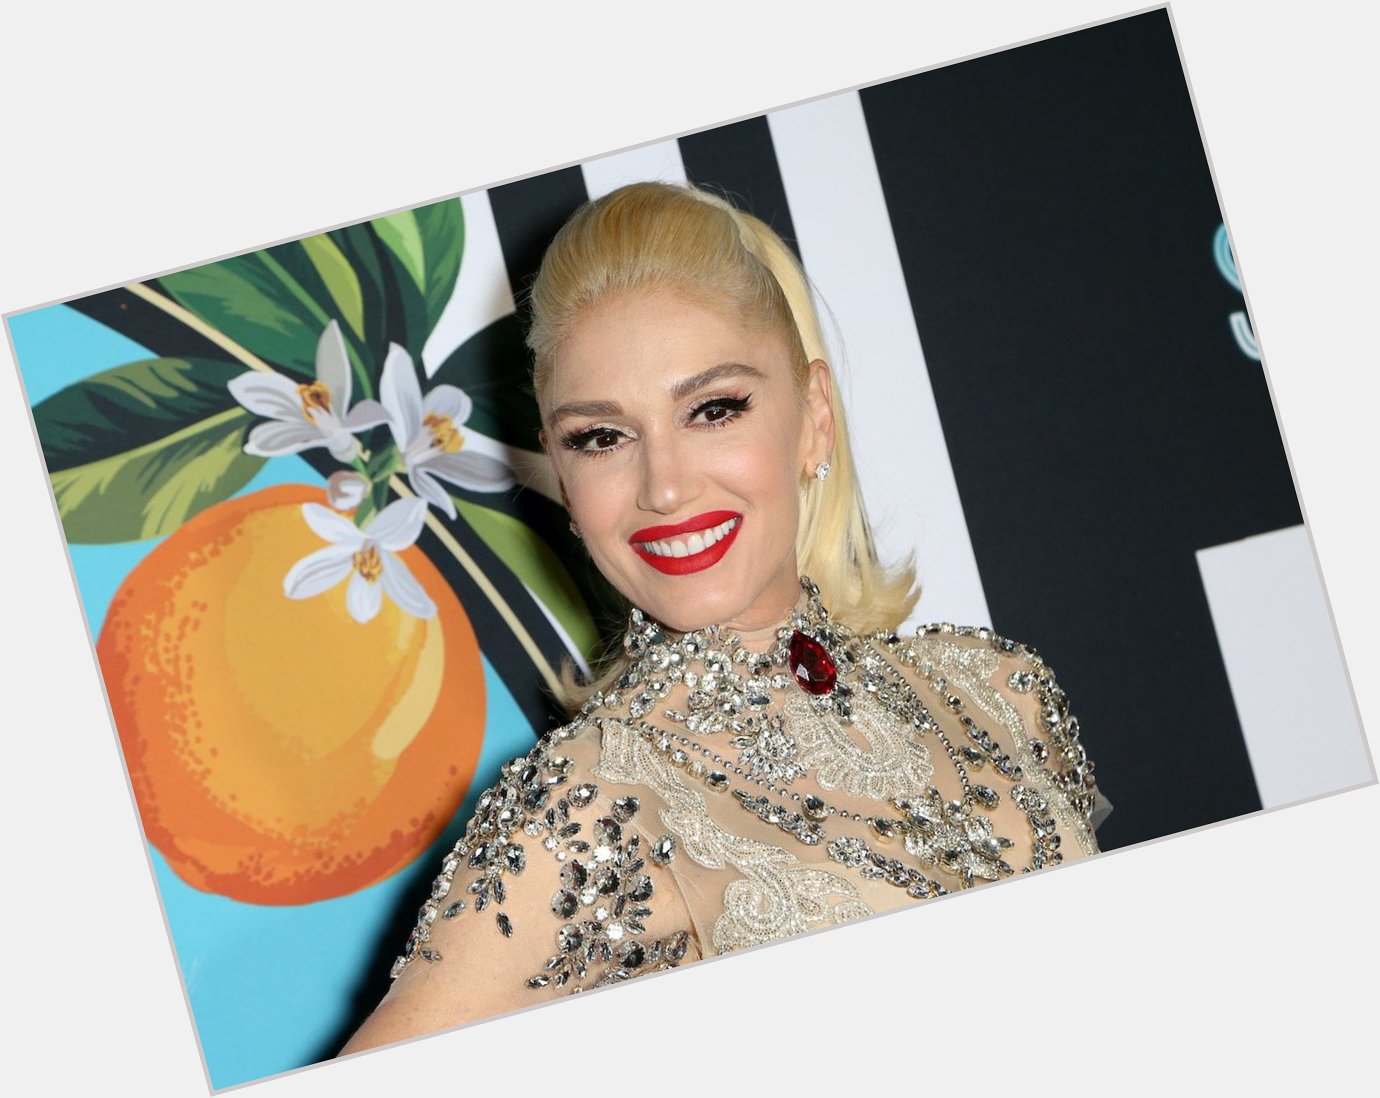 Happy Birthday Gwen Stefani. May the apples grow on an orange tree! 